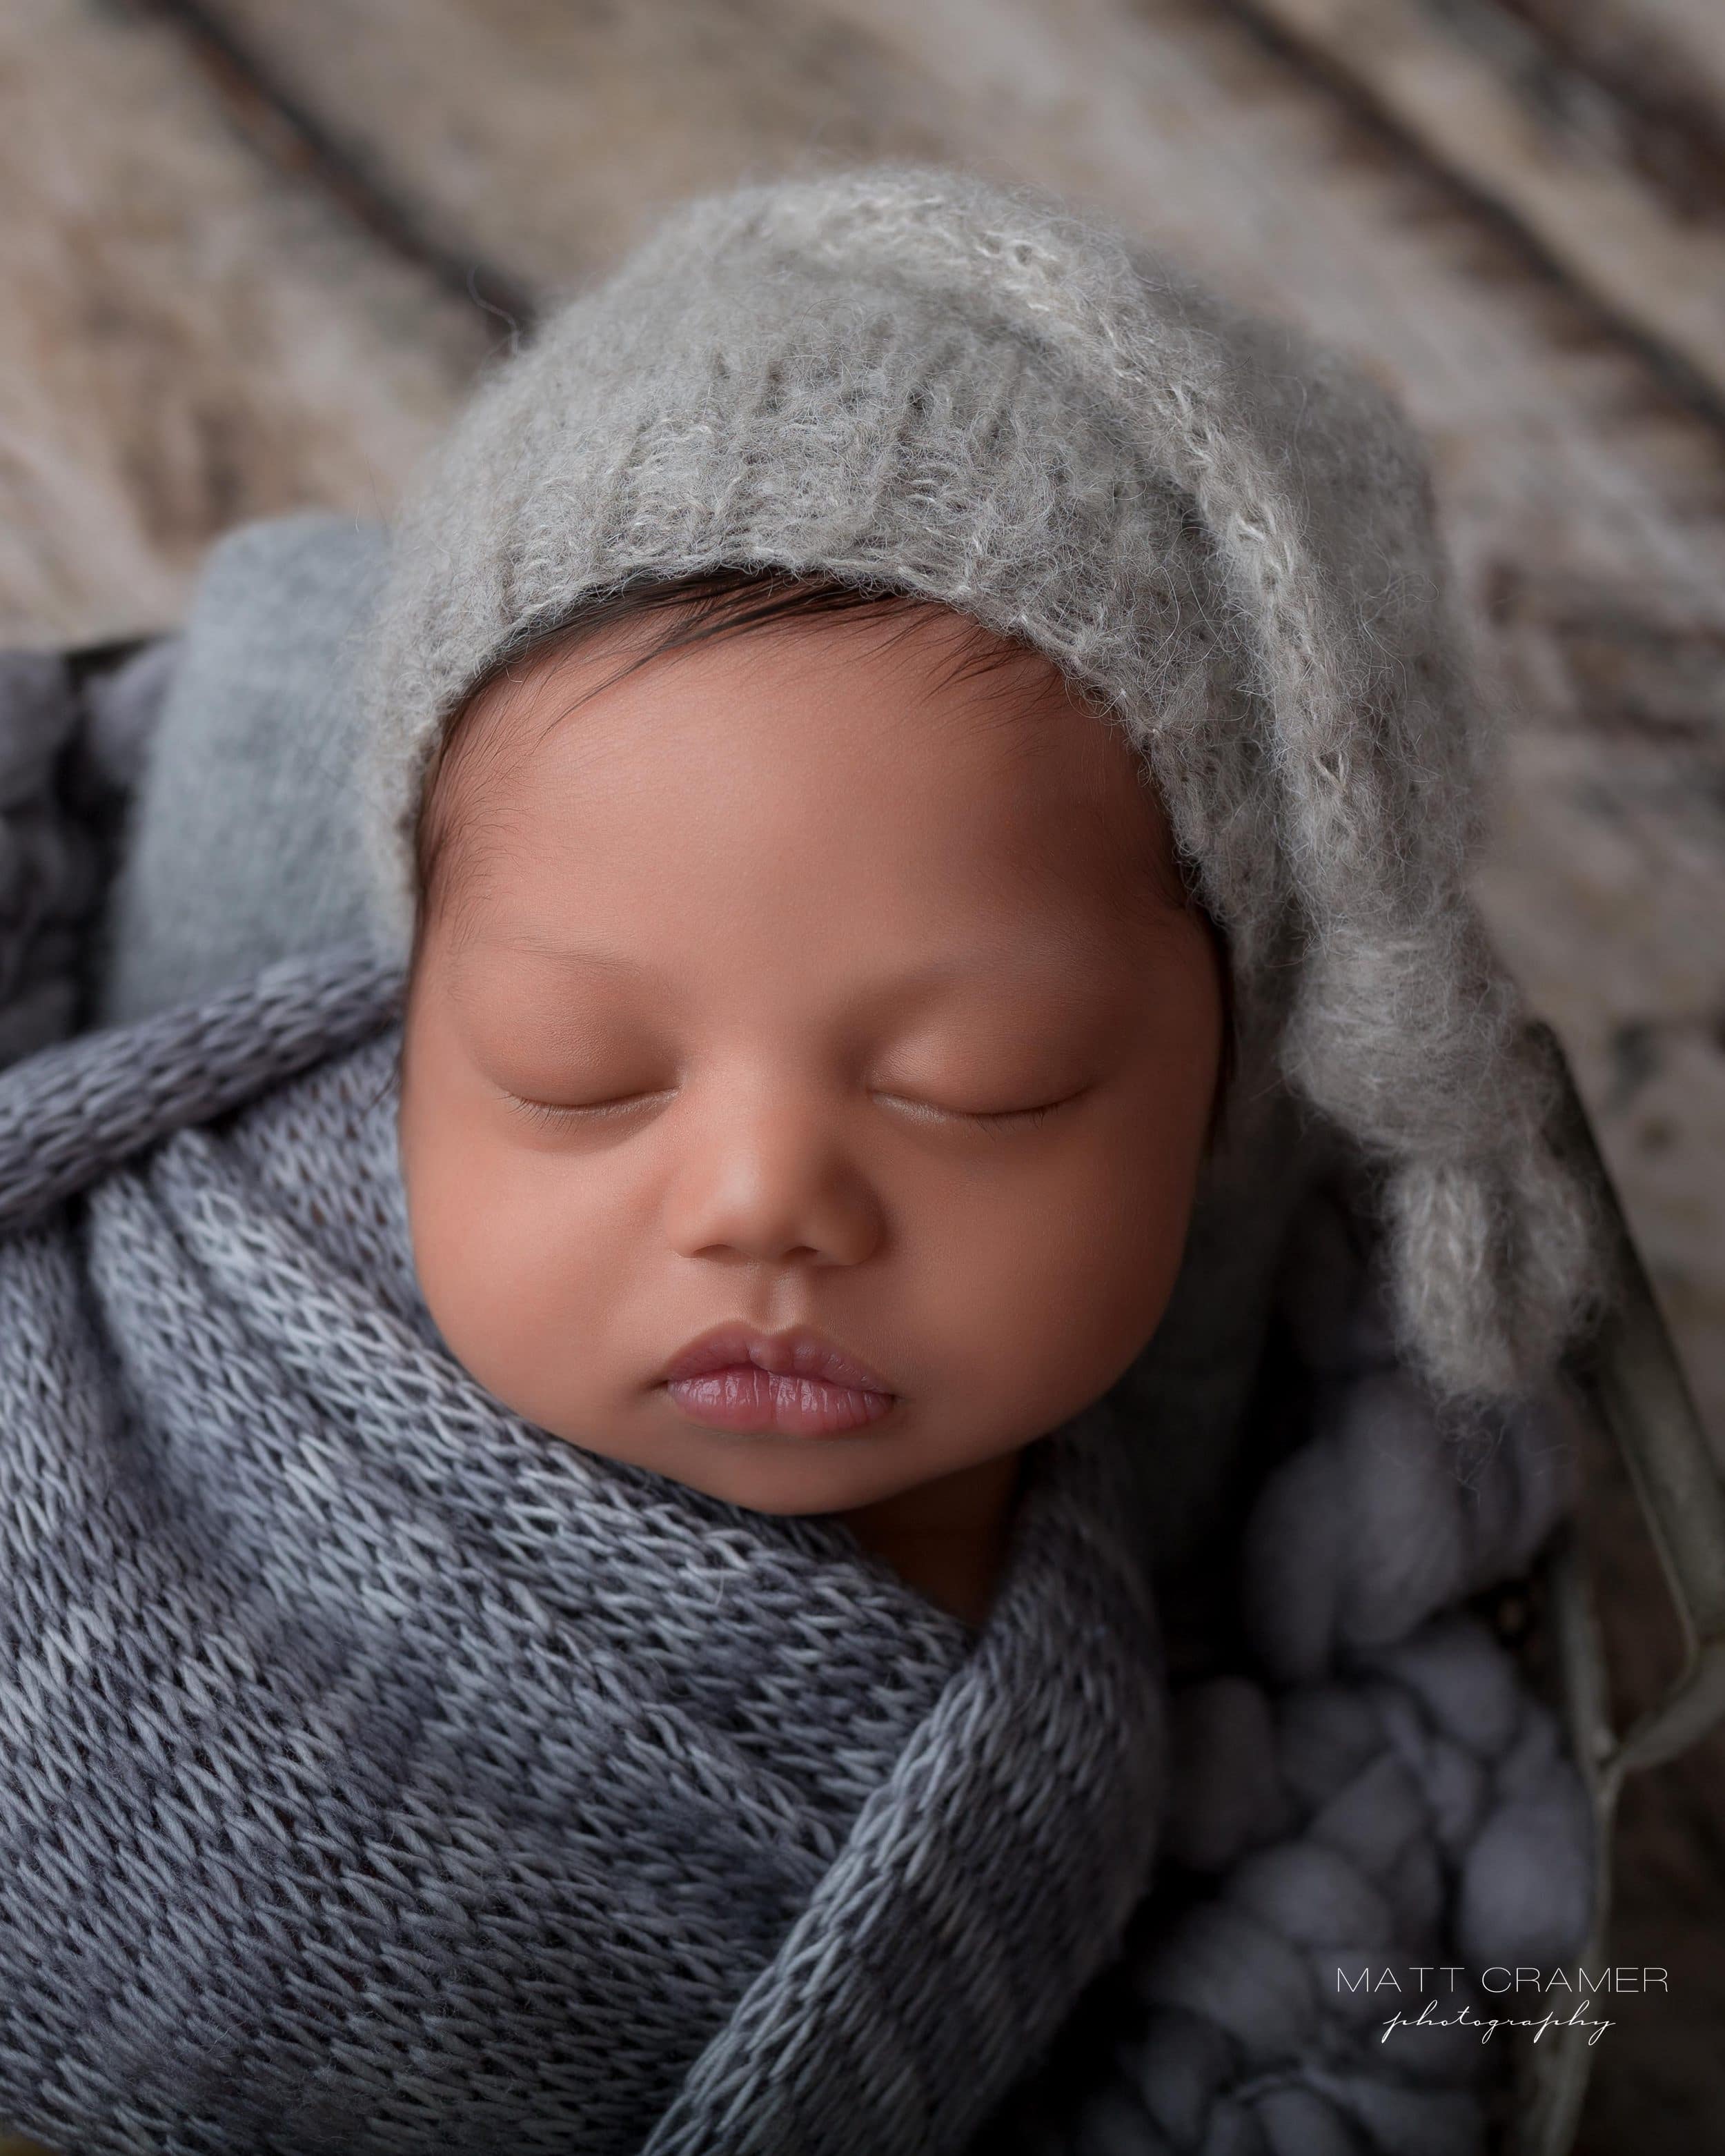 vertical shot of newborn baby wearing knit hat